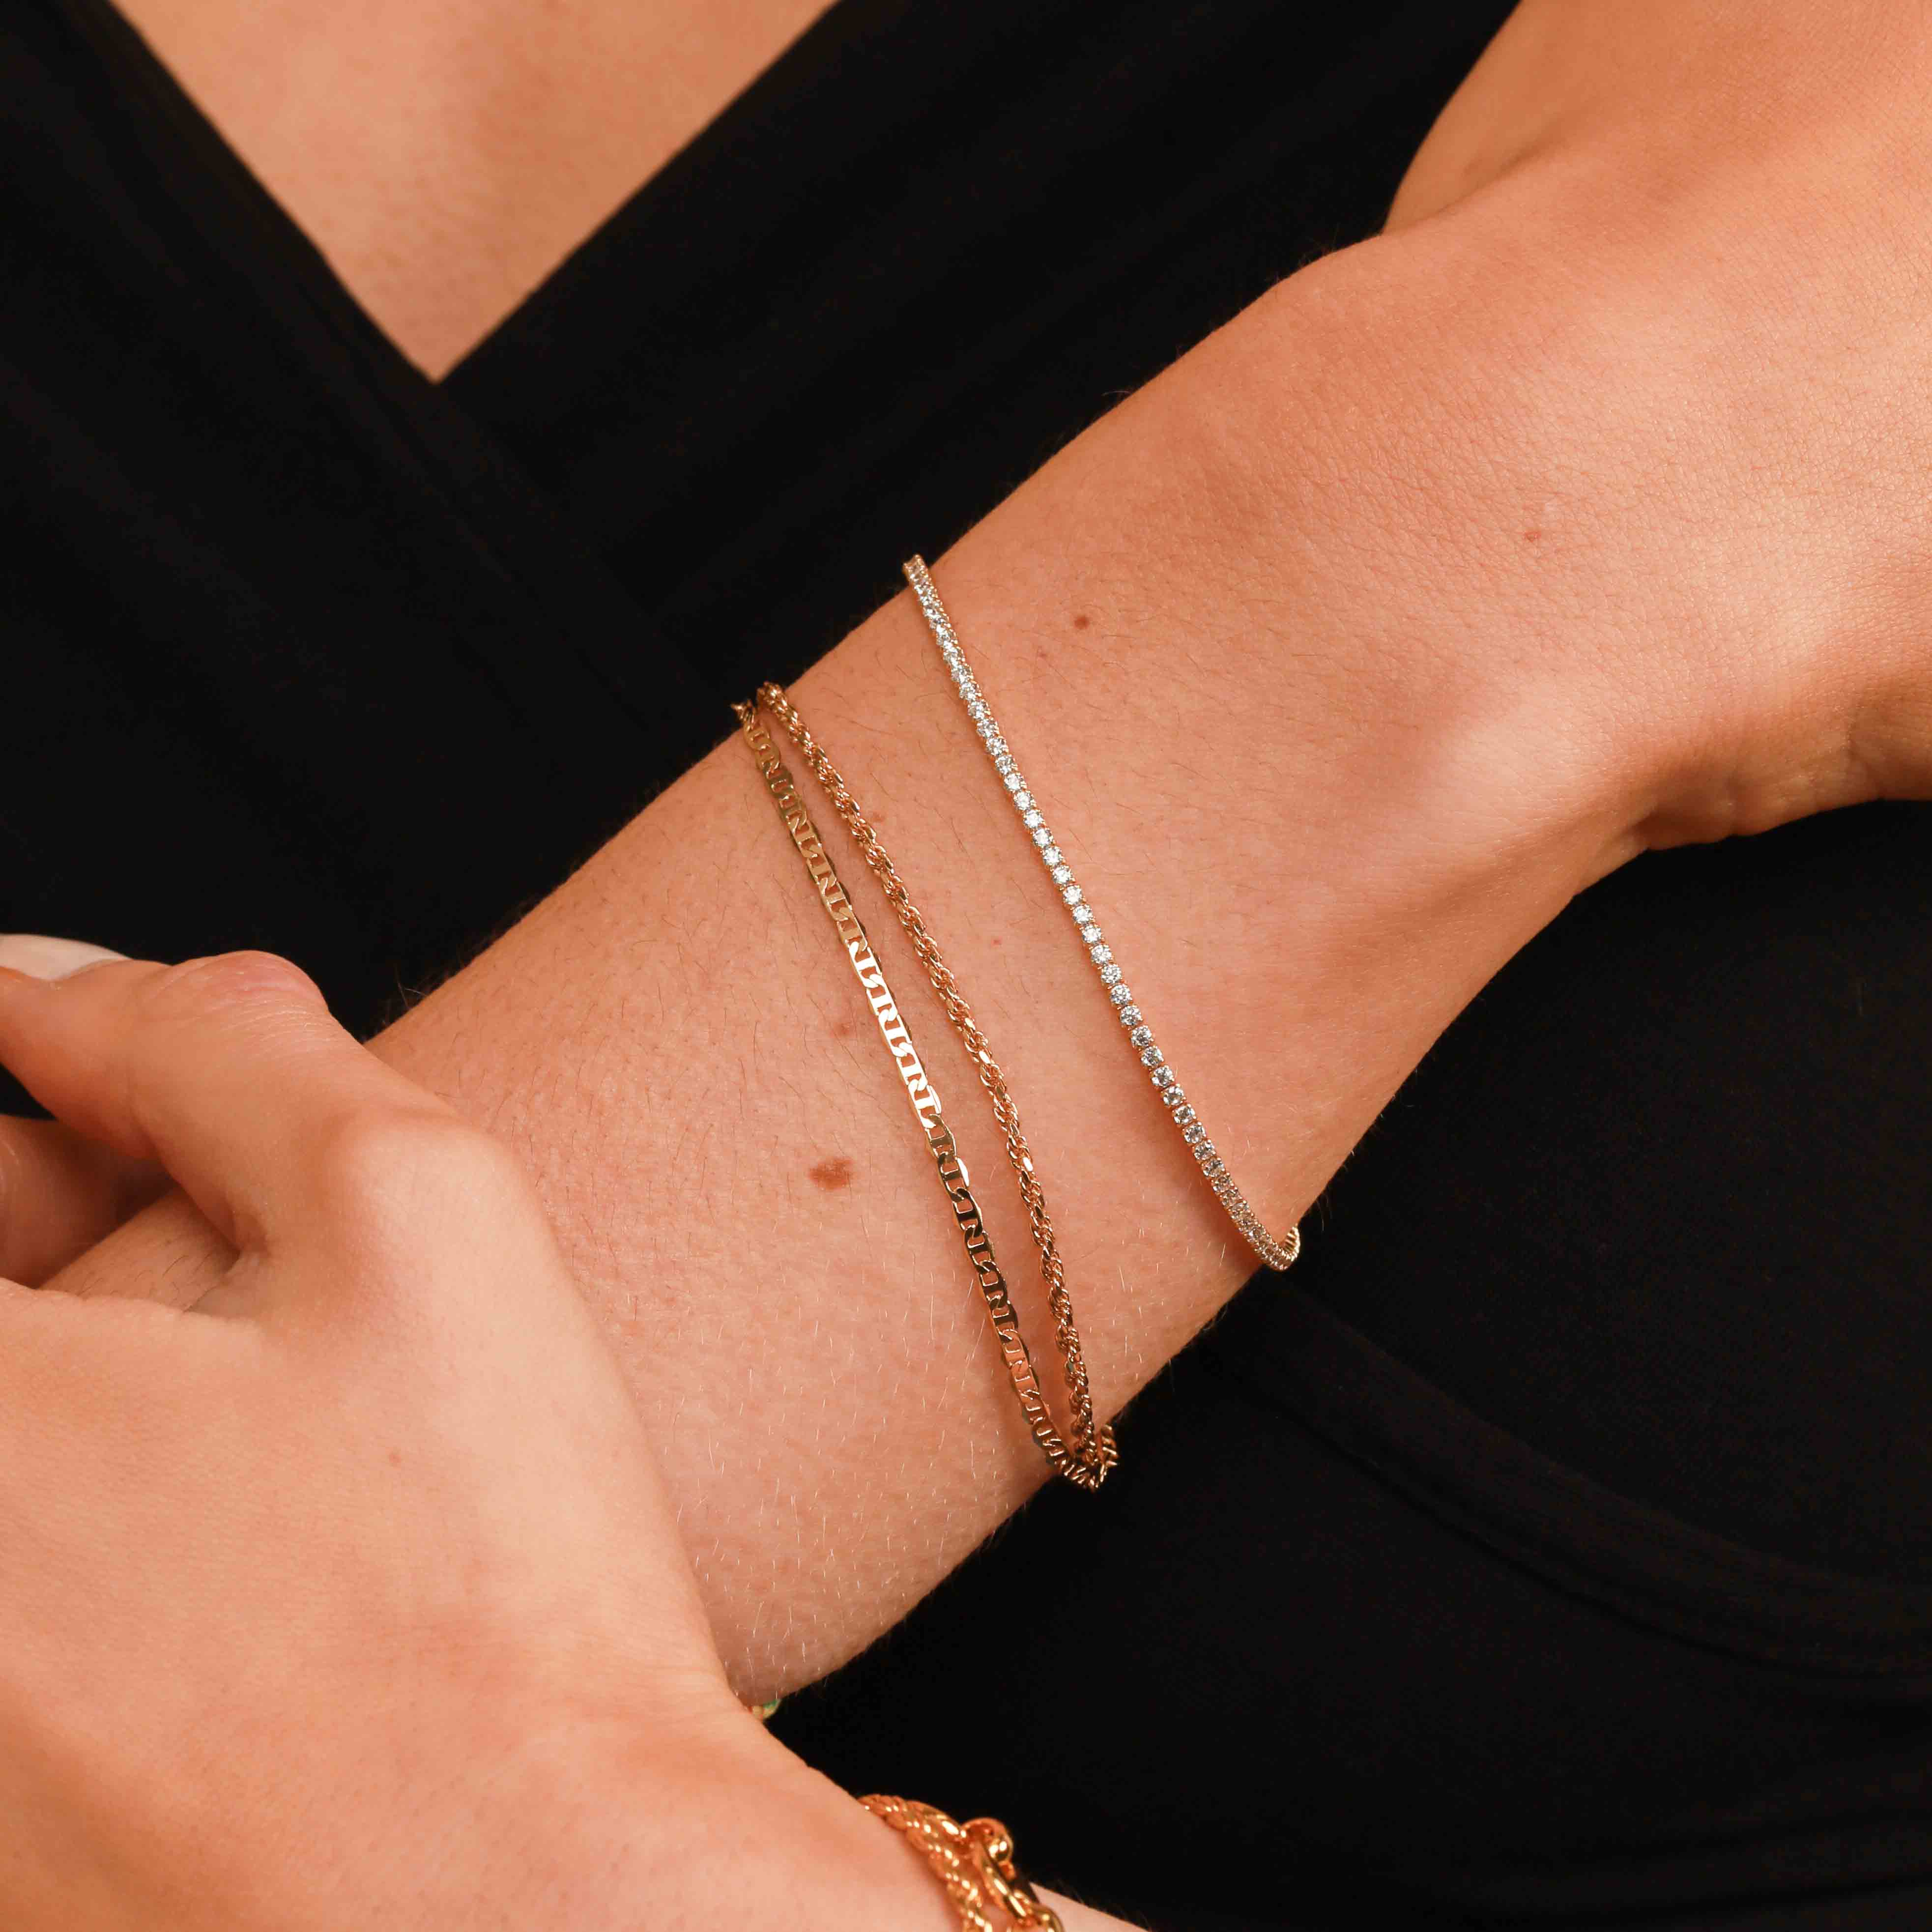 Duo Chain Bracelet in Gold worn with Tennis bracelet